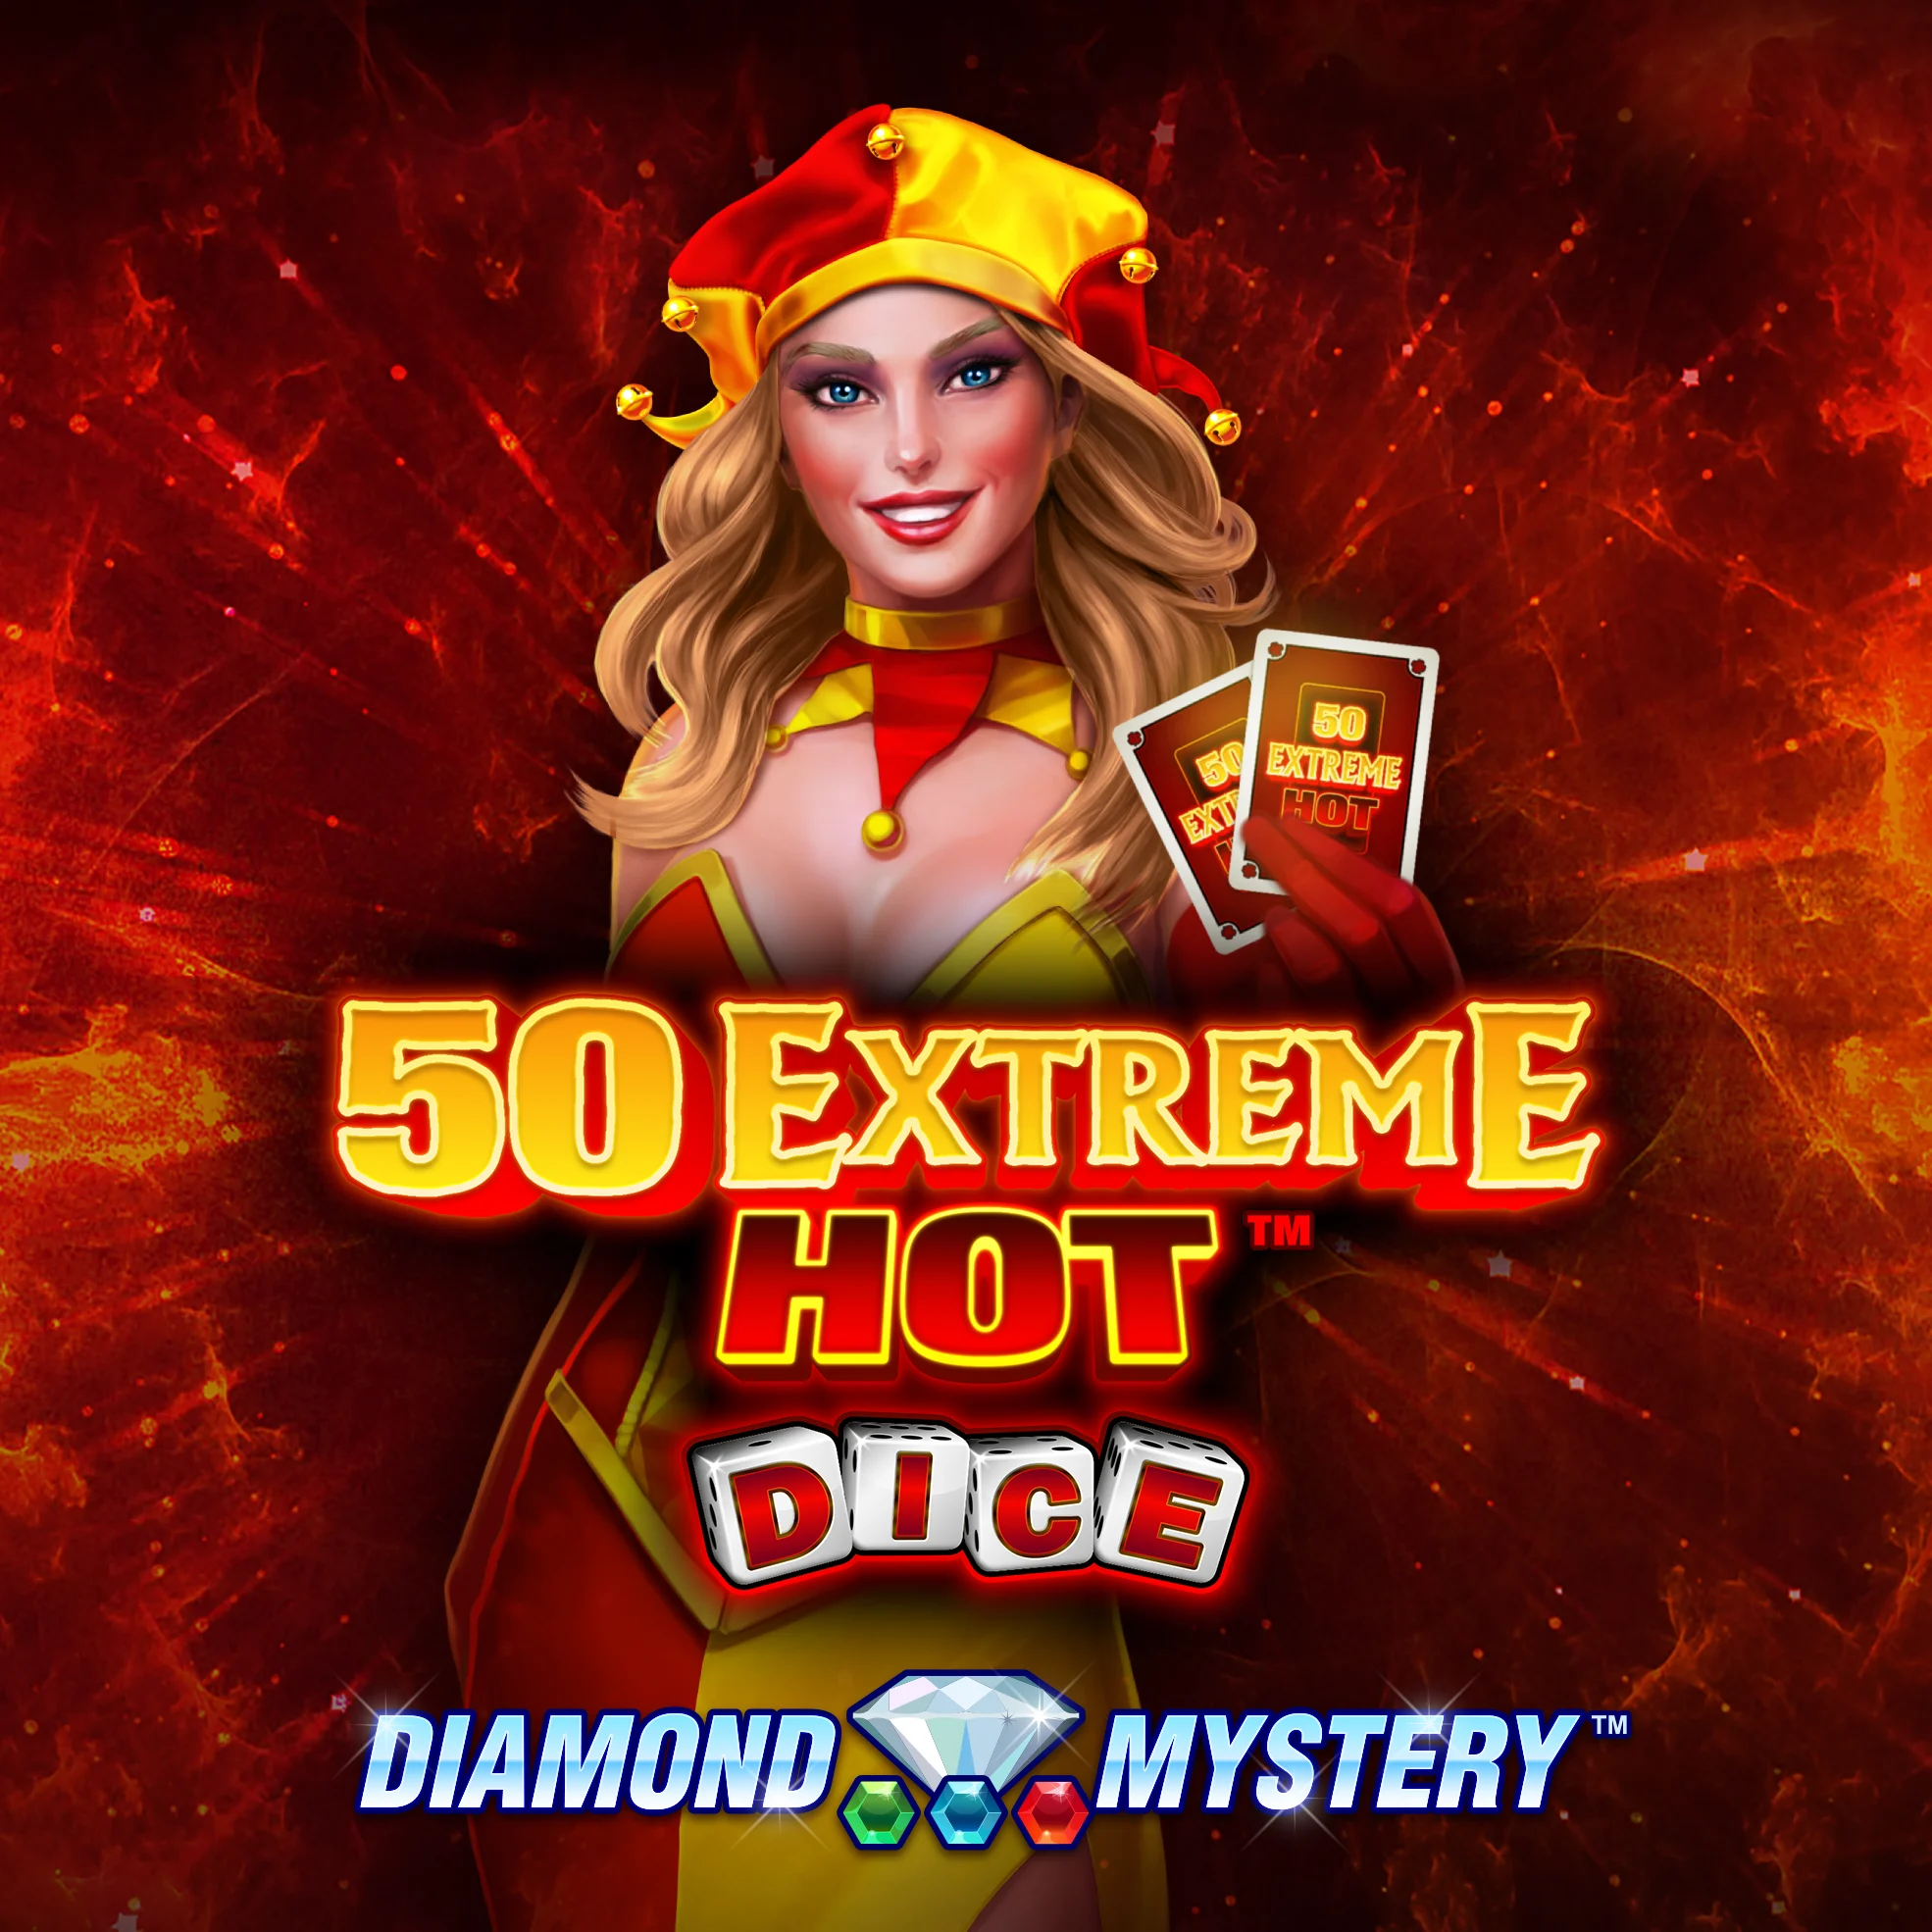 Play 50 Extreme Hot™ Dice on Starcasinodice.be online casino